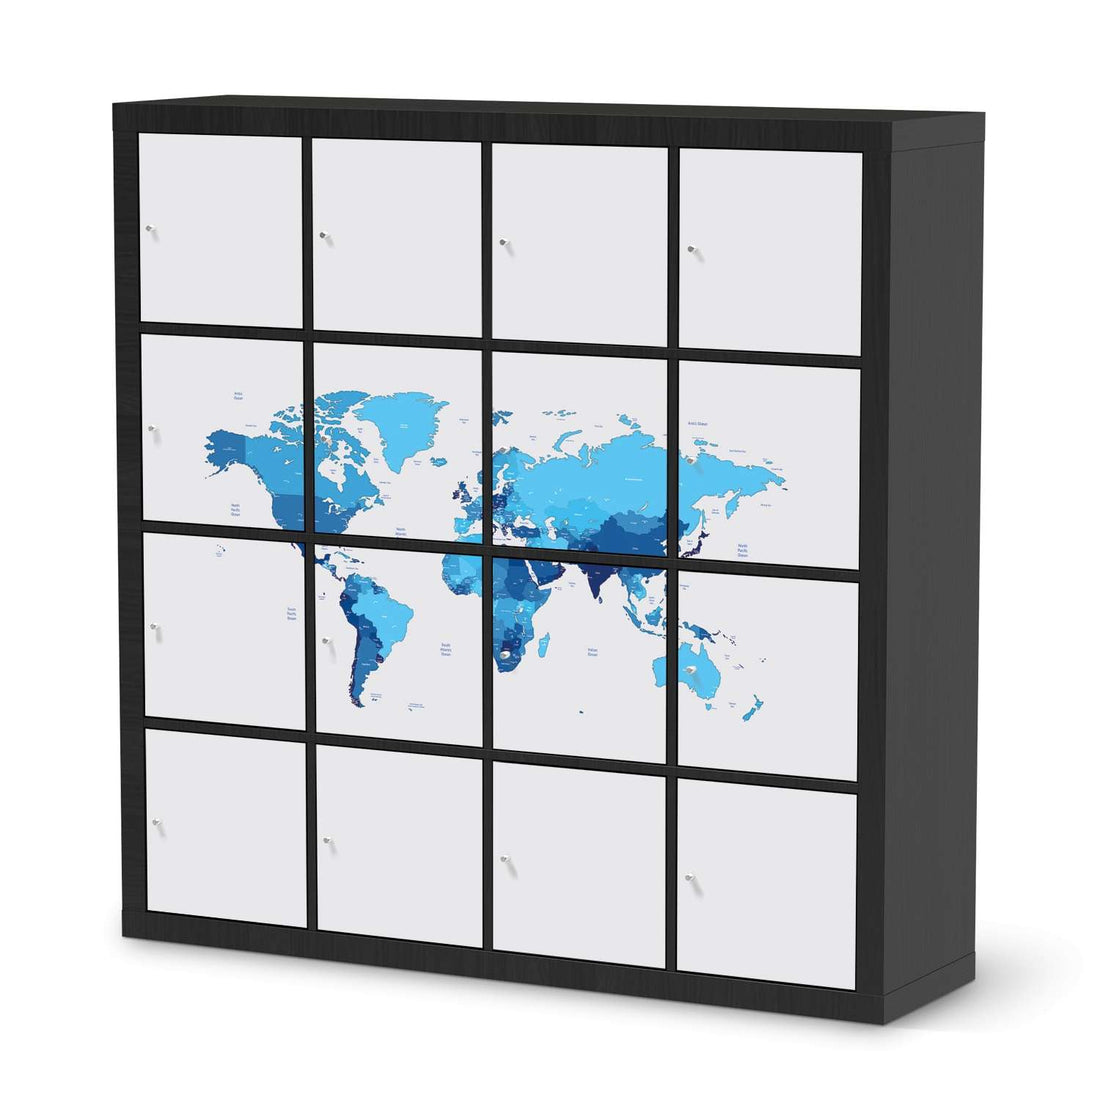 Selbstklebende Folie Politische Weltkarte - IKEA Expedit Regal 16 Türen - schwarz